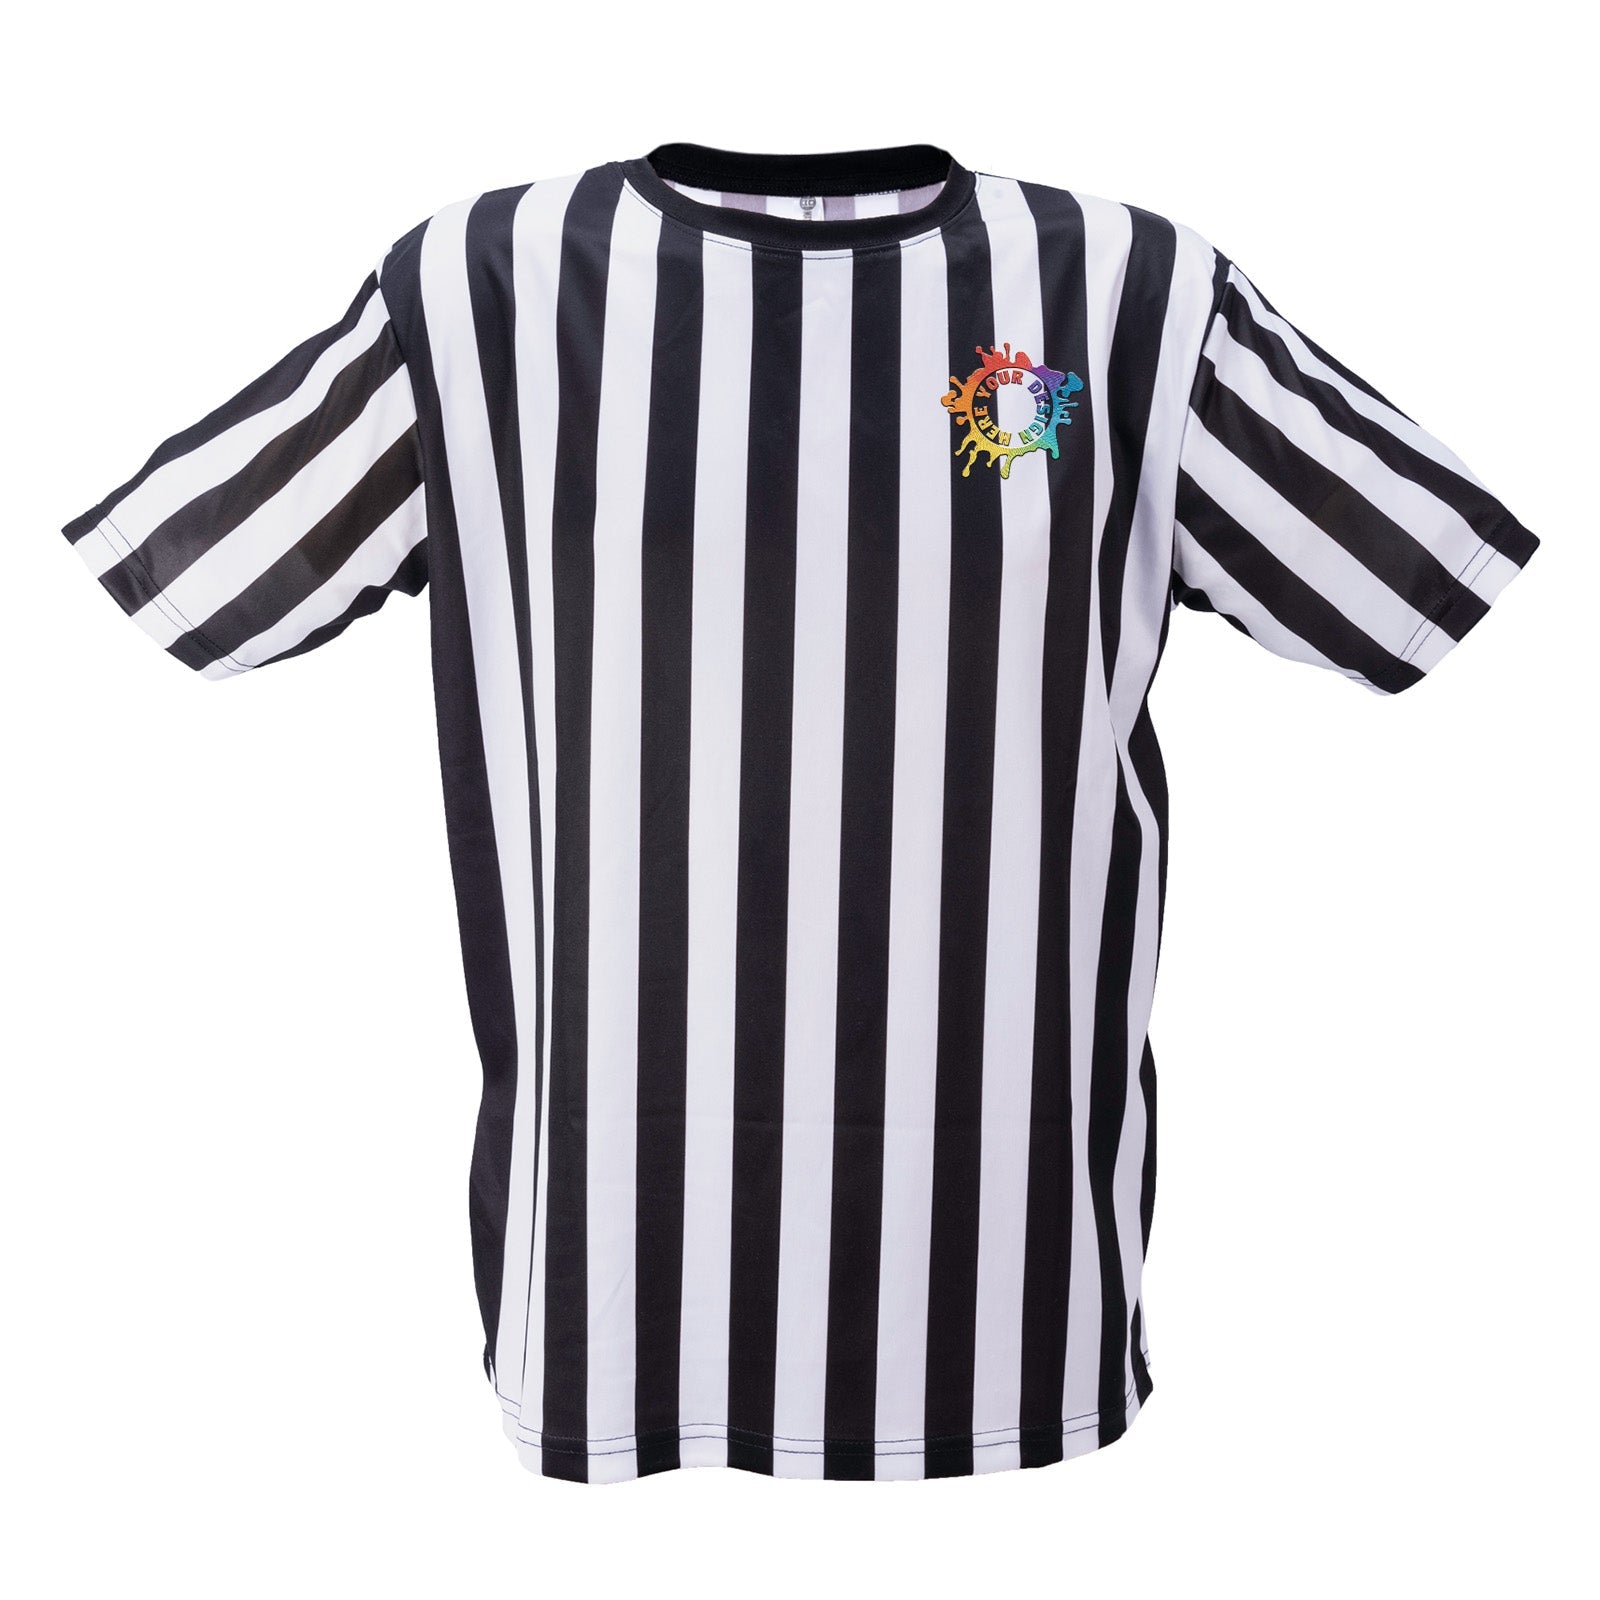 Mato & Hash Kids Referee Shirt for Costume W/Embroidery - Mato & Hash